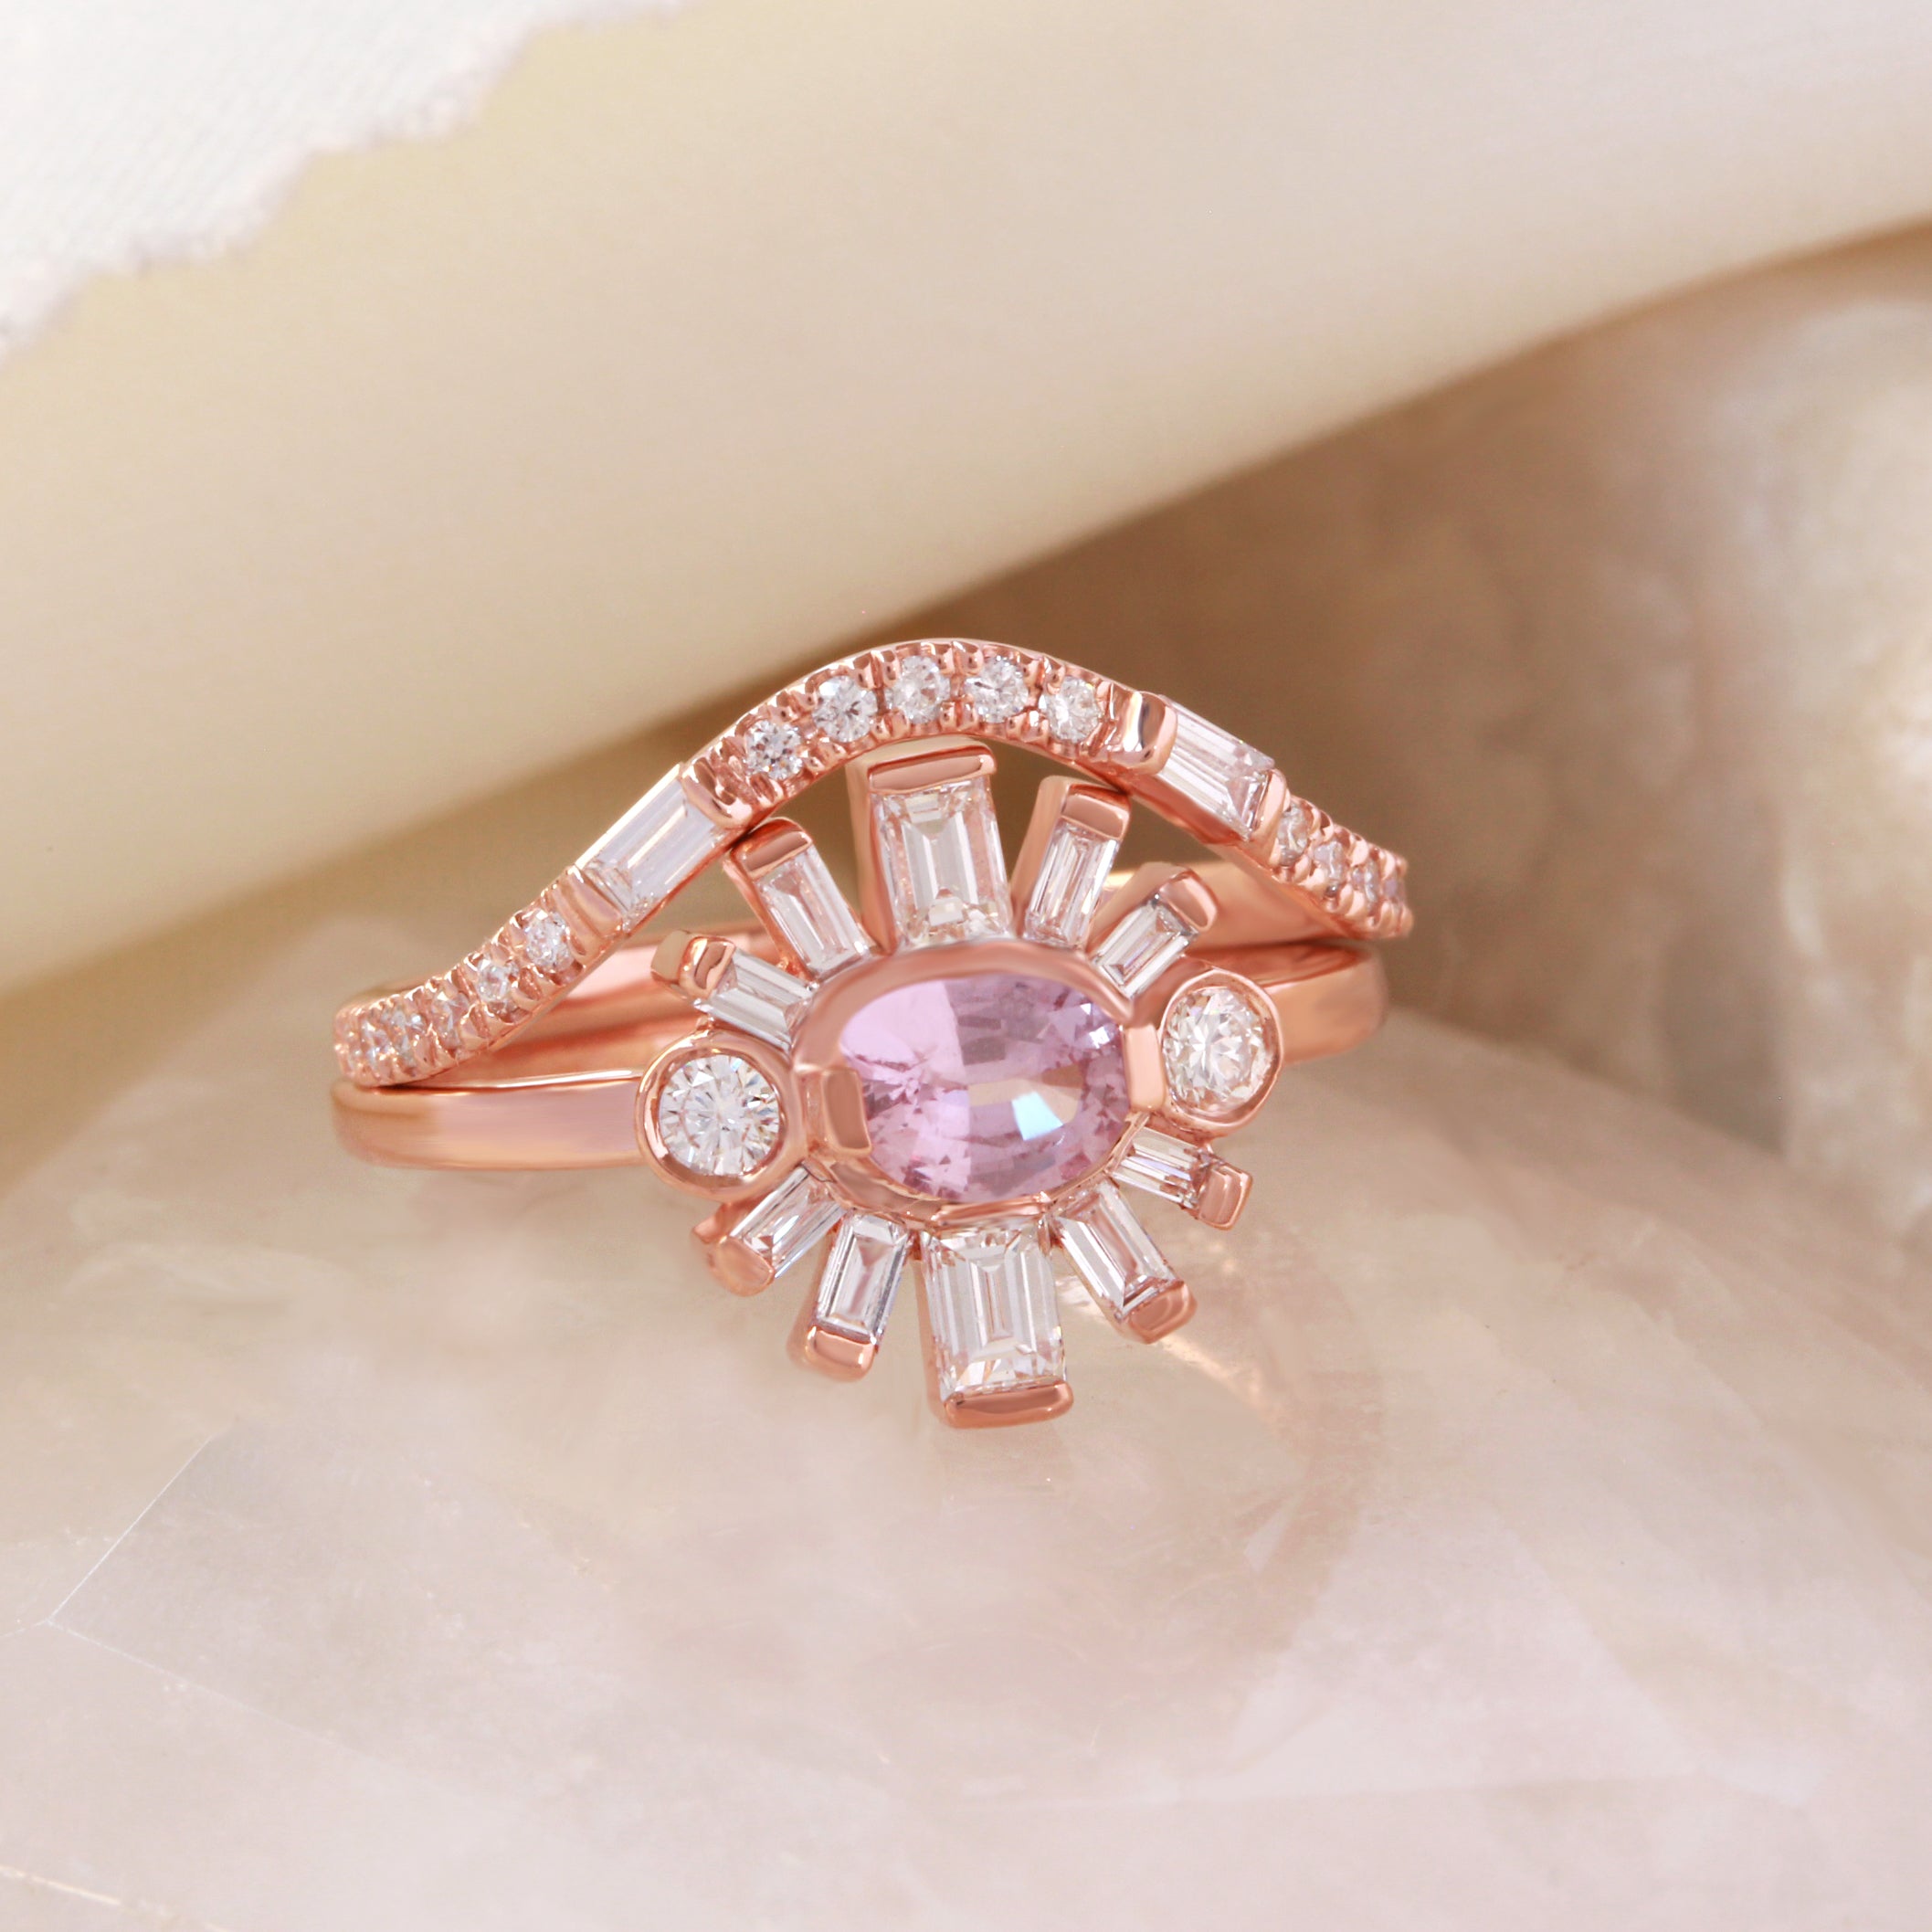 U Curve Diamond Wedding Ring, 14K Rose Gold, Size 6.5, READY TO SHIP!